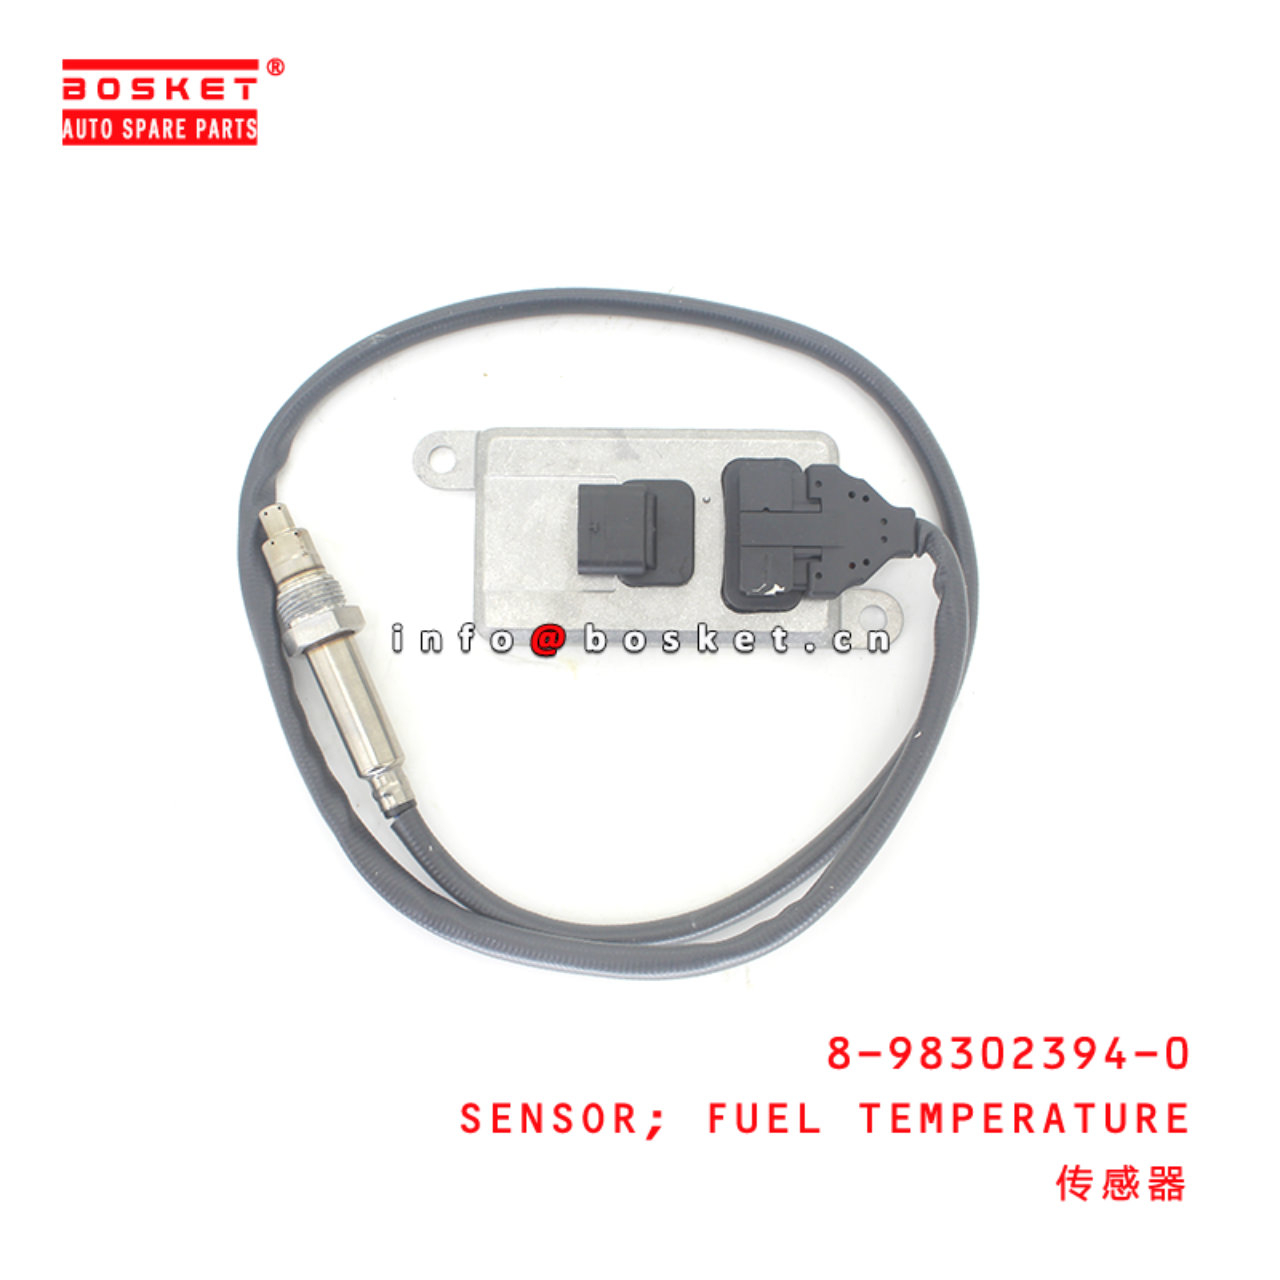 8-98302394-0 Fuel Temperature Sensor suitable for ...